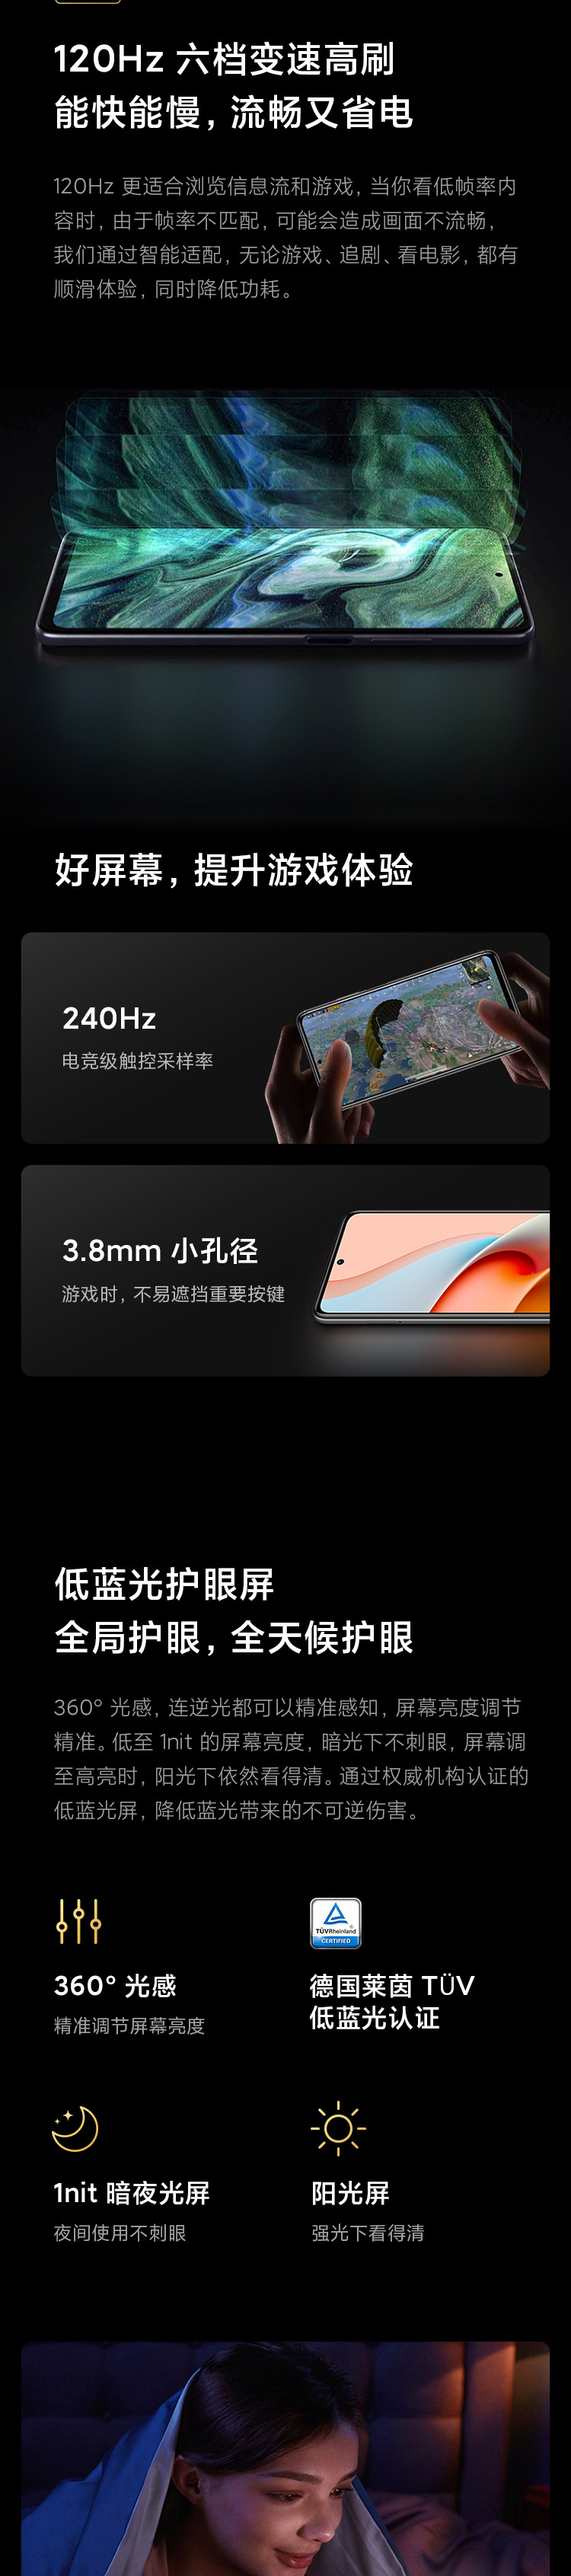 Redmi Note 9 Pro 5G 一亿像素 骁龙750G 33W快充 120Hz刷新率 湖光秋色 8GB+128GB 智能手机 小米 红米